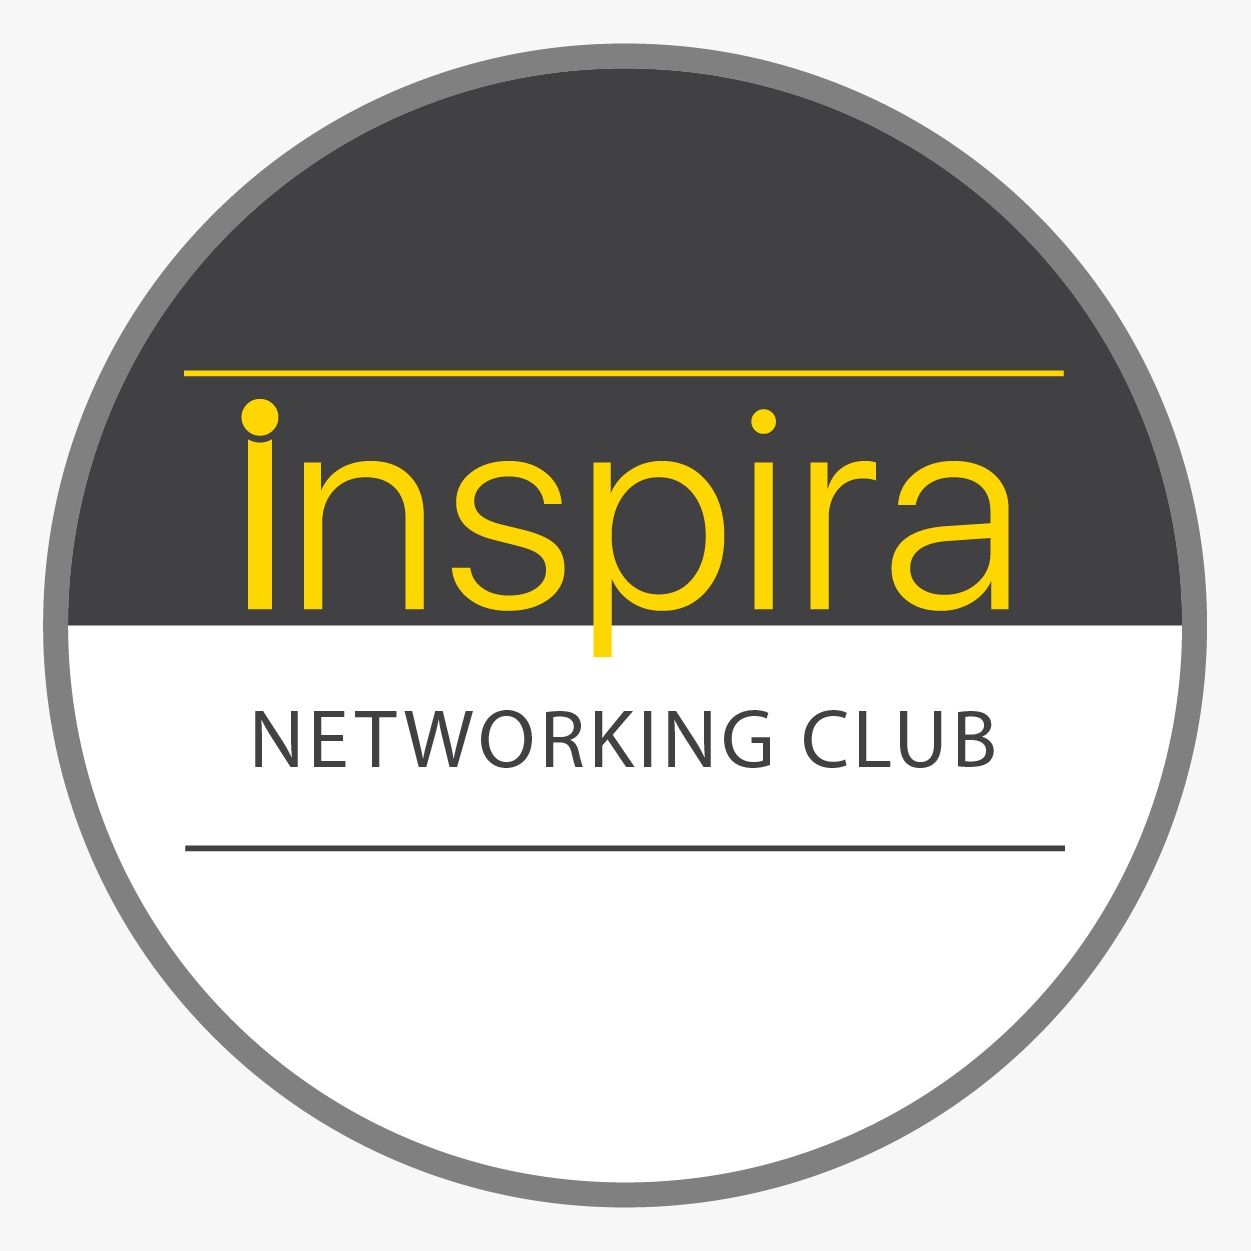 Inspira Networking Club